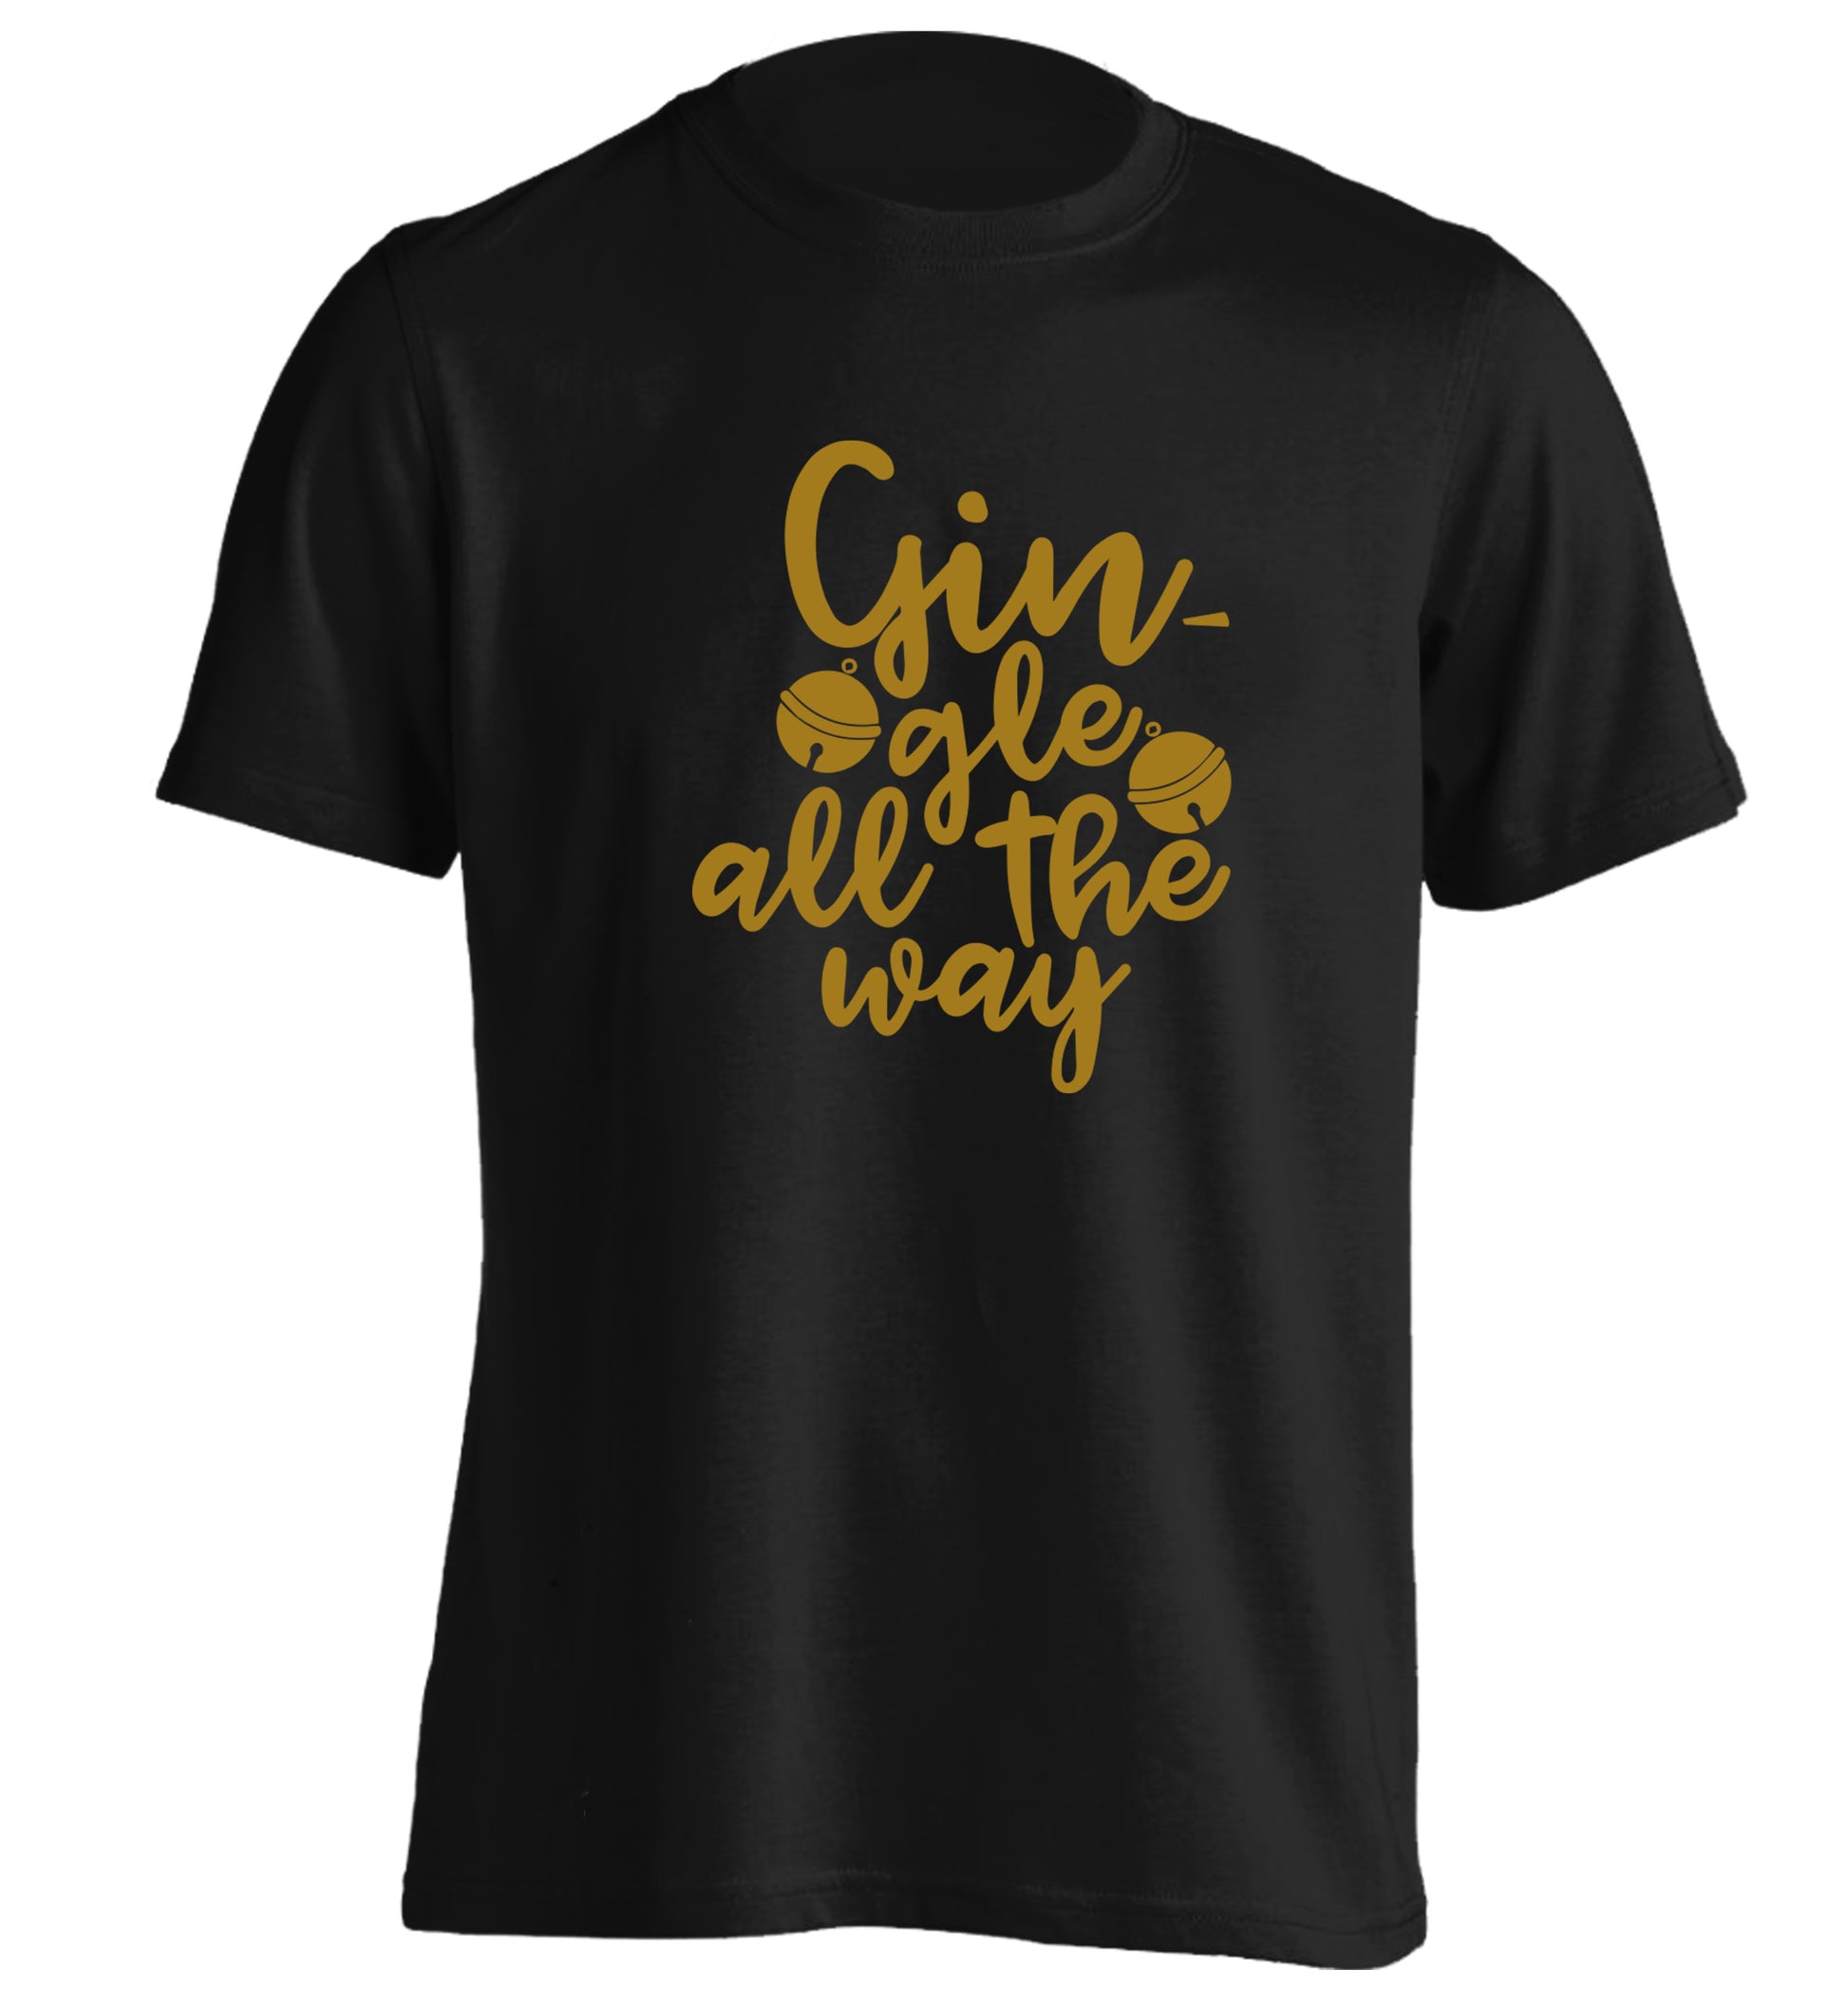 Gin-gle all the way adults unisex black Tshirt 2XL